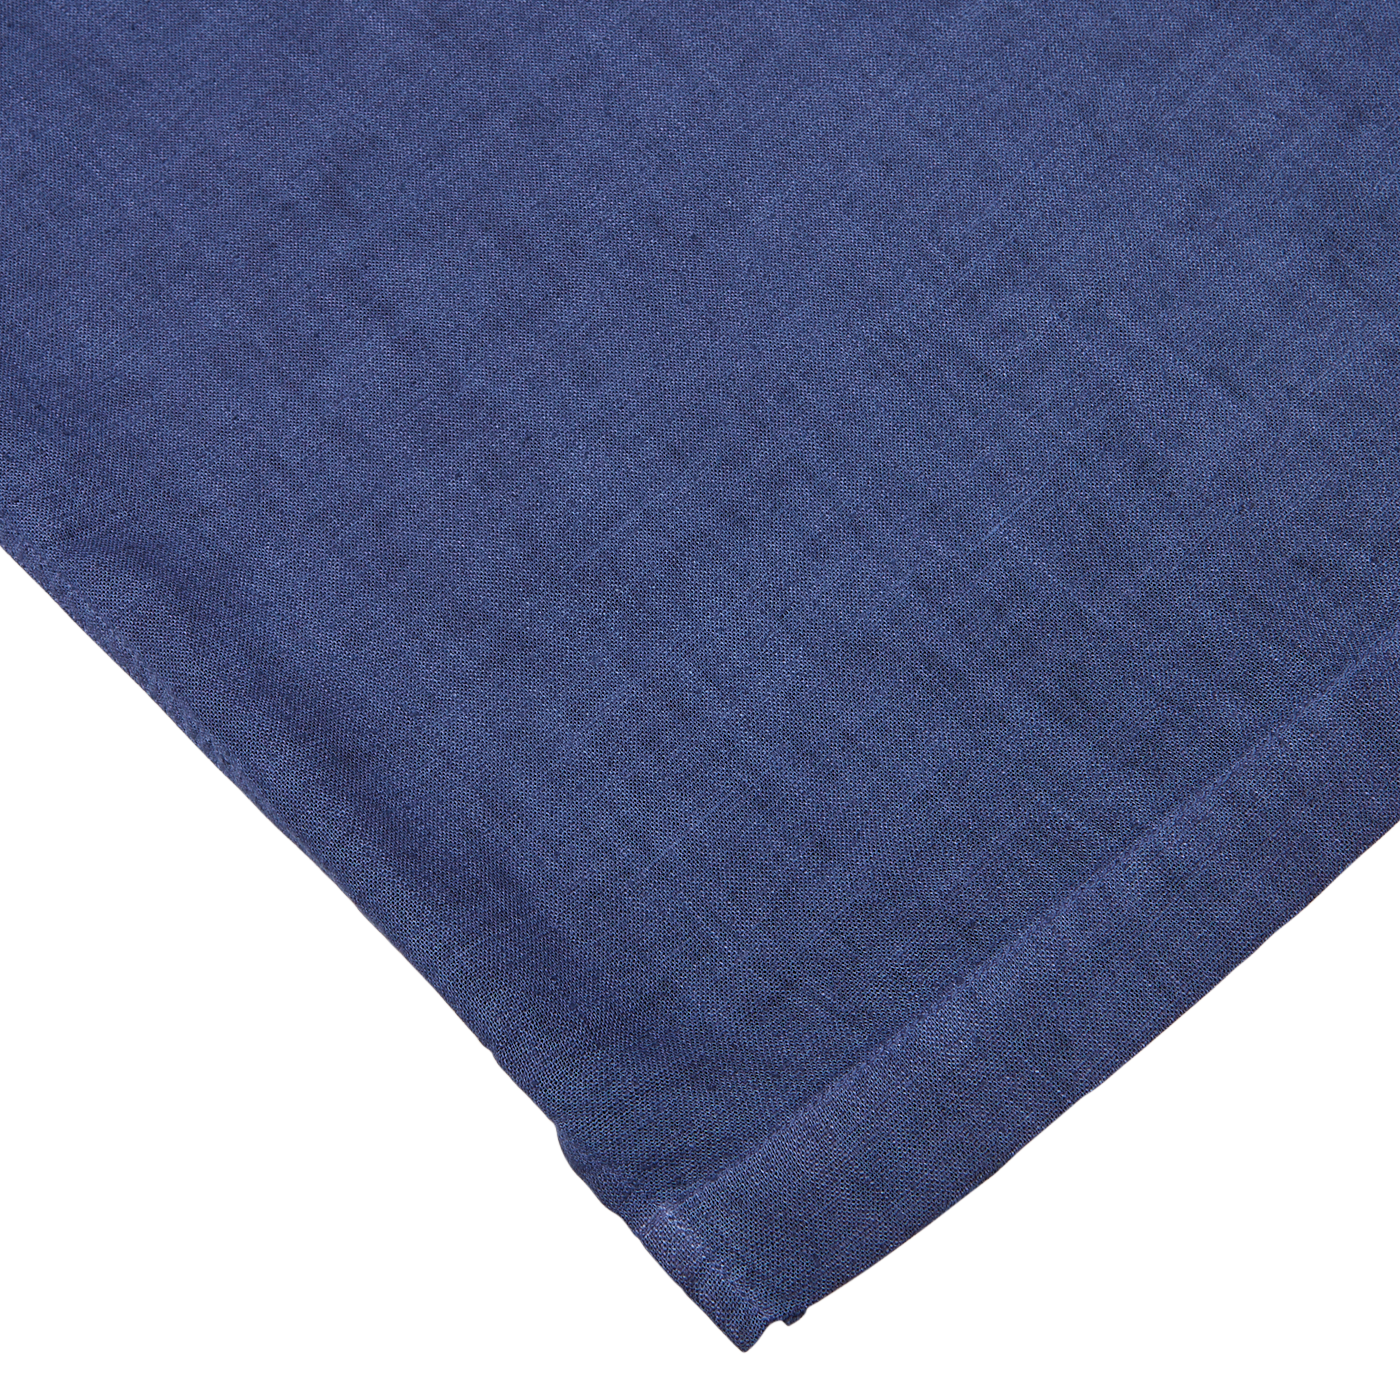 A close-up view of a textured Altea Dark Blue Linen Blend Open Collar Shirt fabric on a white background, highlighting its summer essential short sleeve design.